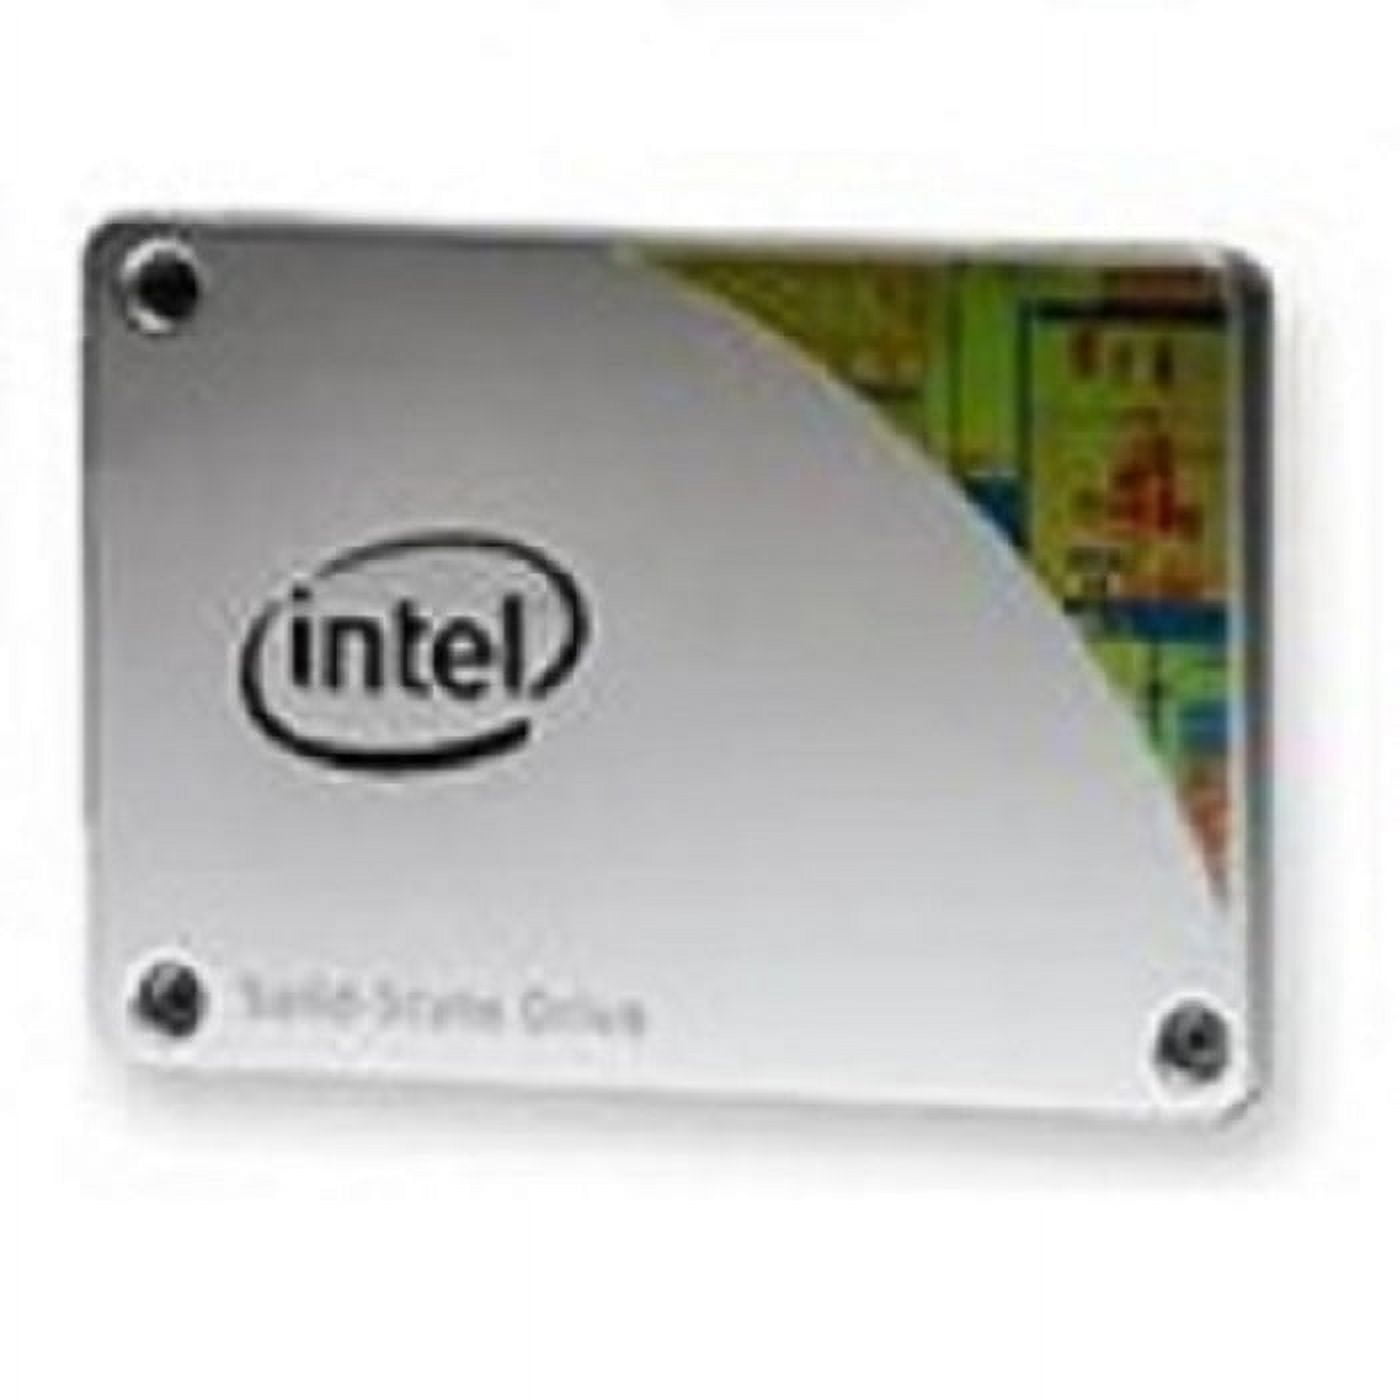 Crucial MX500 - SSD - 500 GB - SATA 6Gb/s - CT500MX500SSD1 - Solid State  Drives 